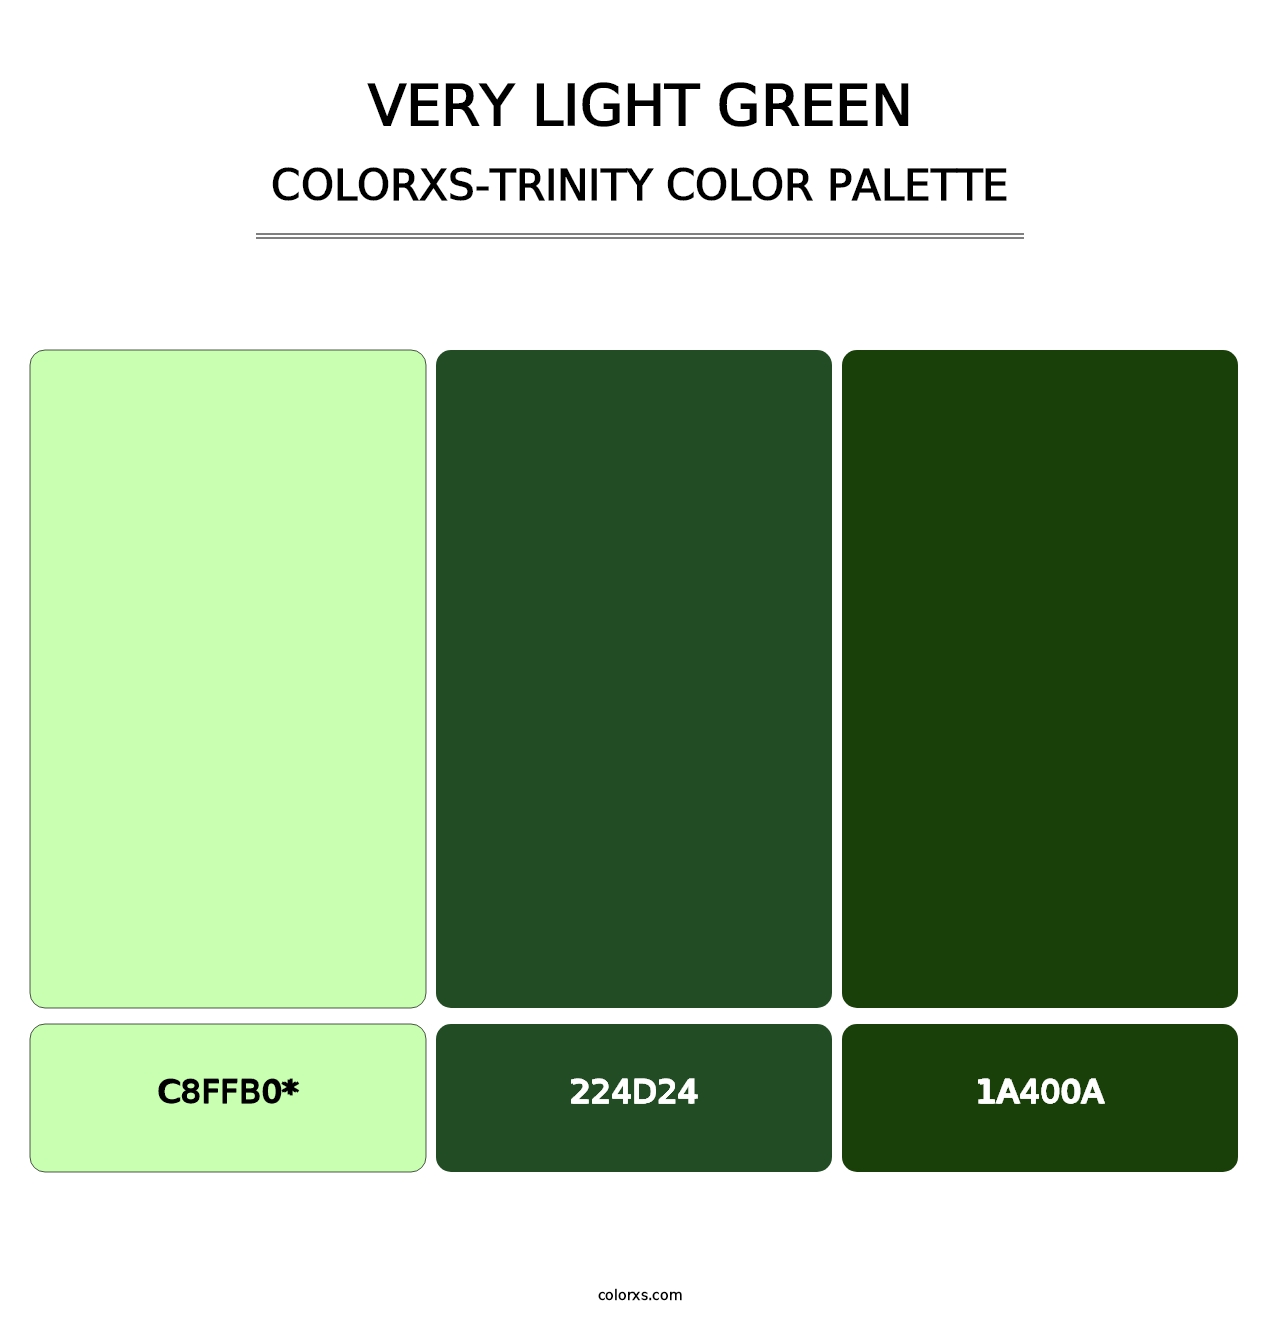 Very Light Green - Colorxs Trinity Palette